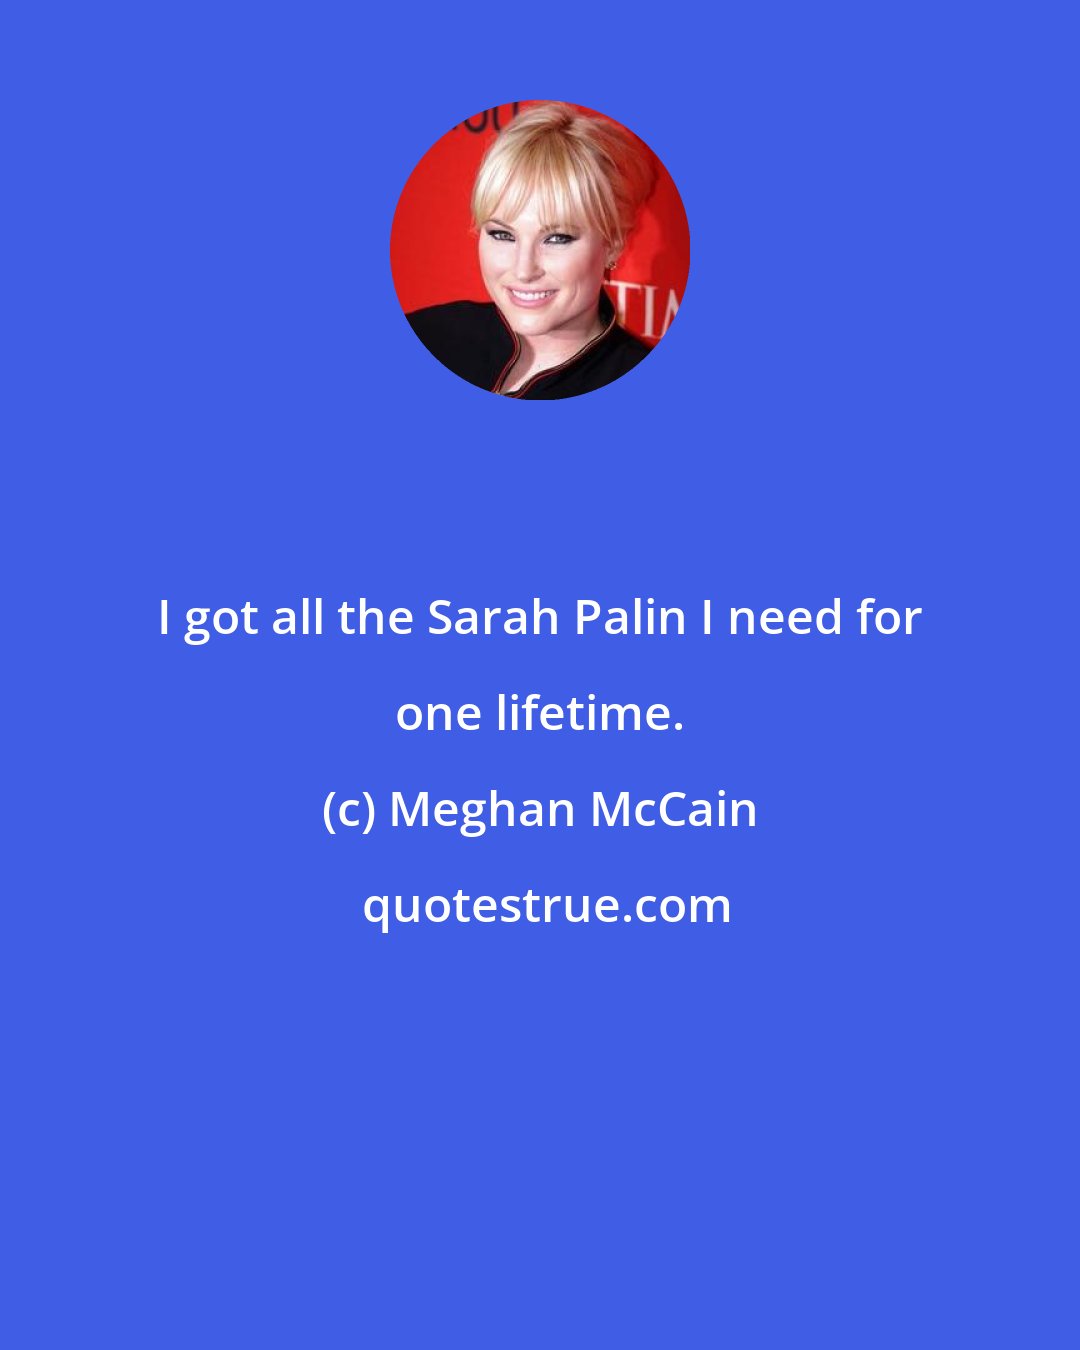 Meghan McCain: I got all the Sarah Palin I need for one lifetime.